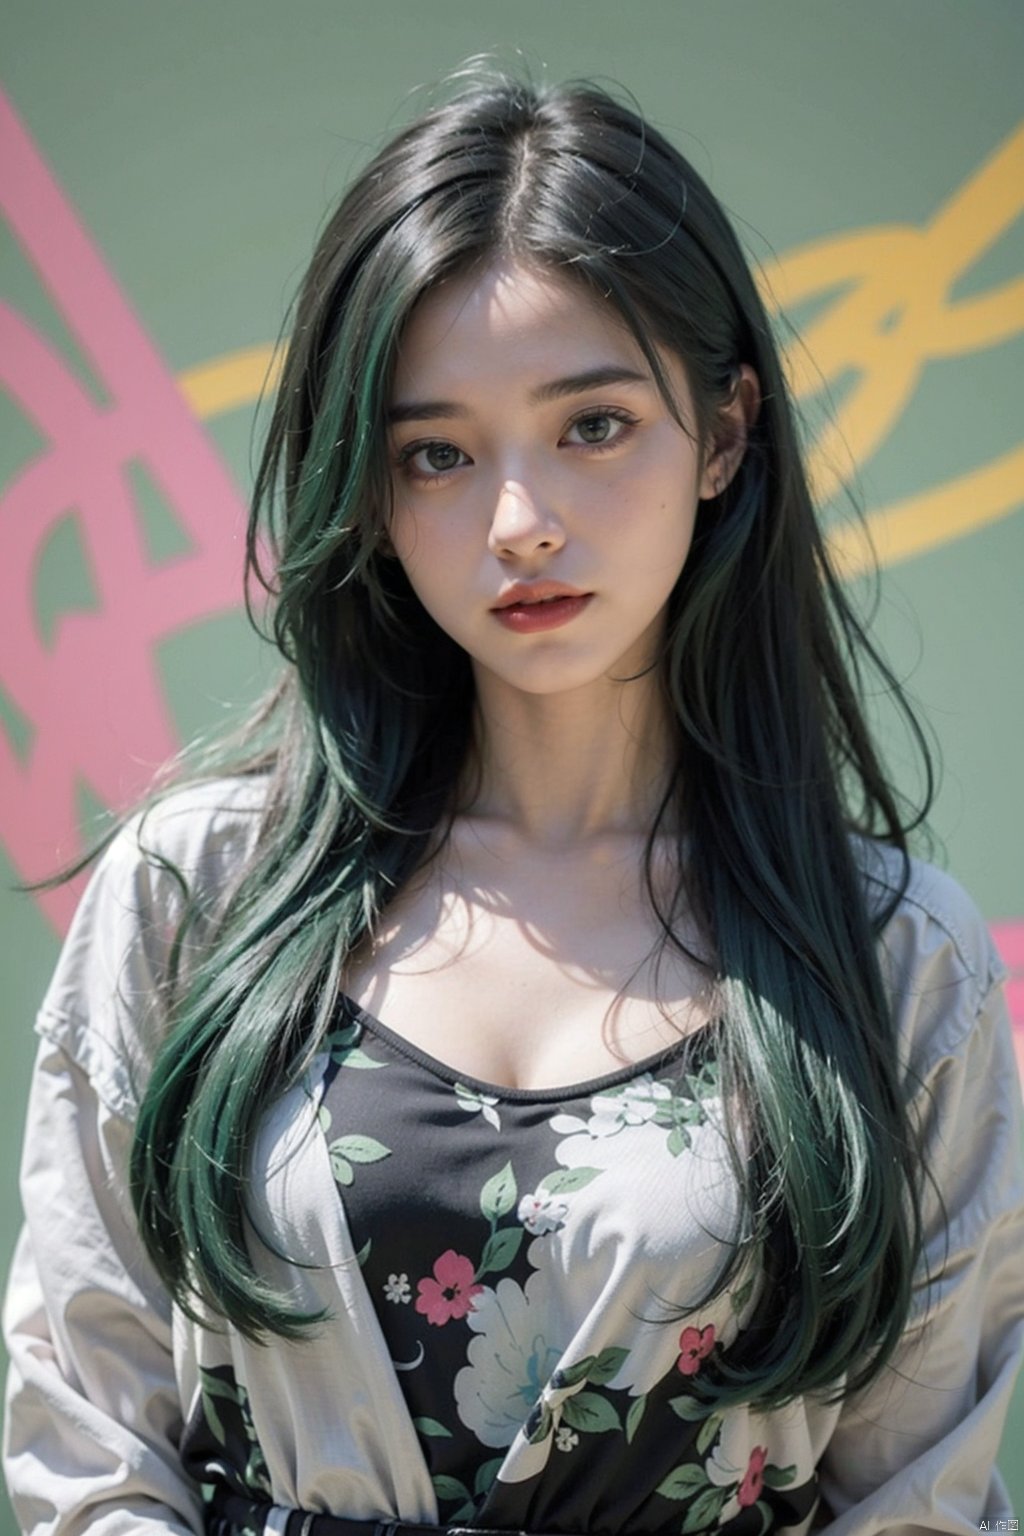  21yo girl, green hair, colorful background,